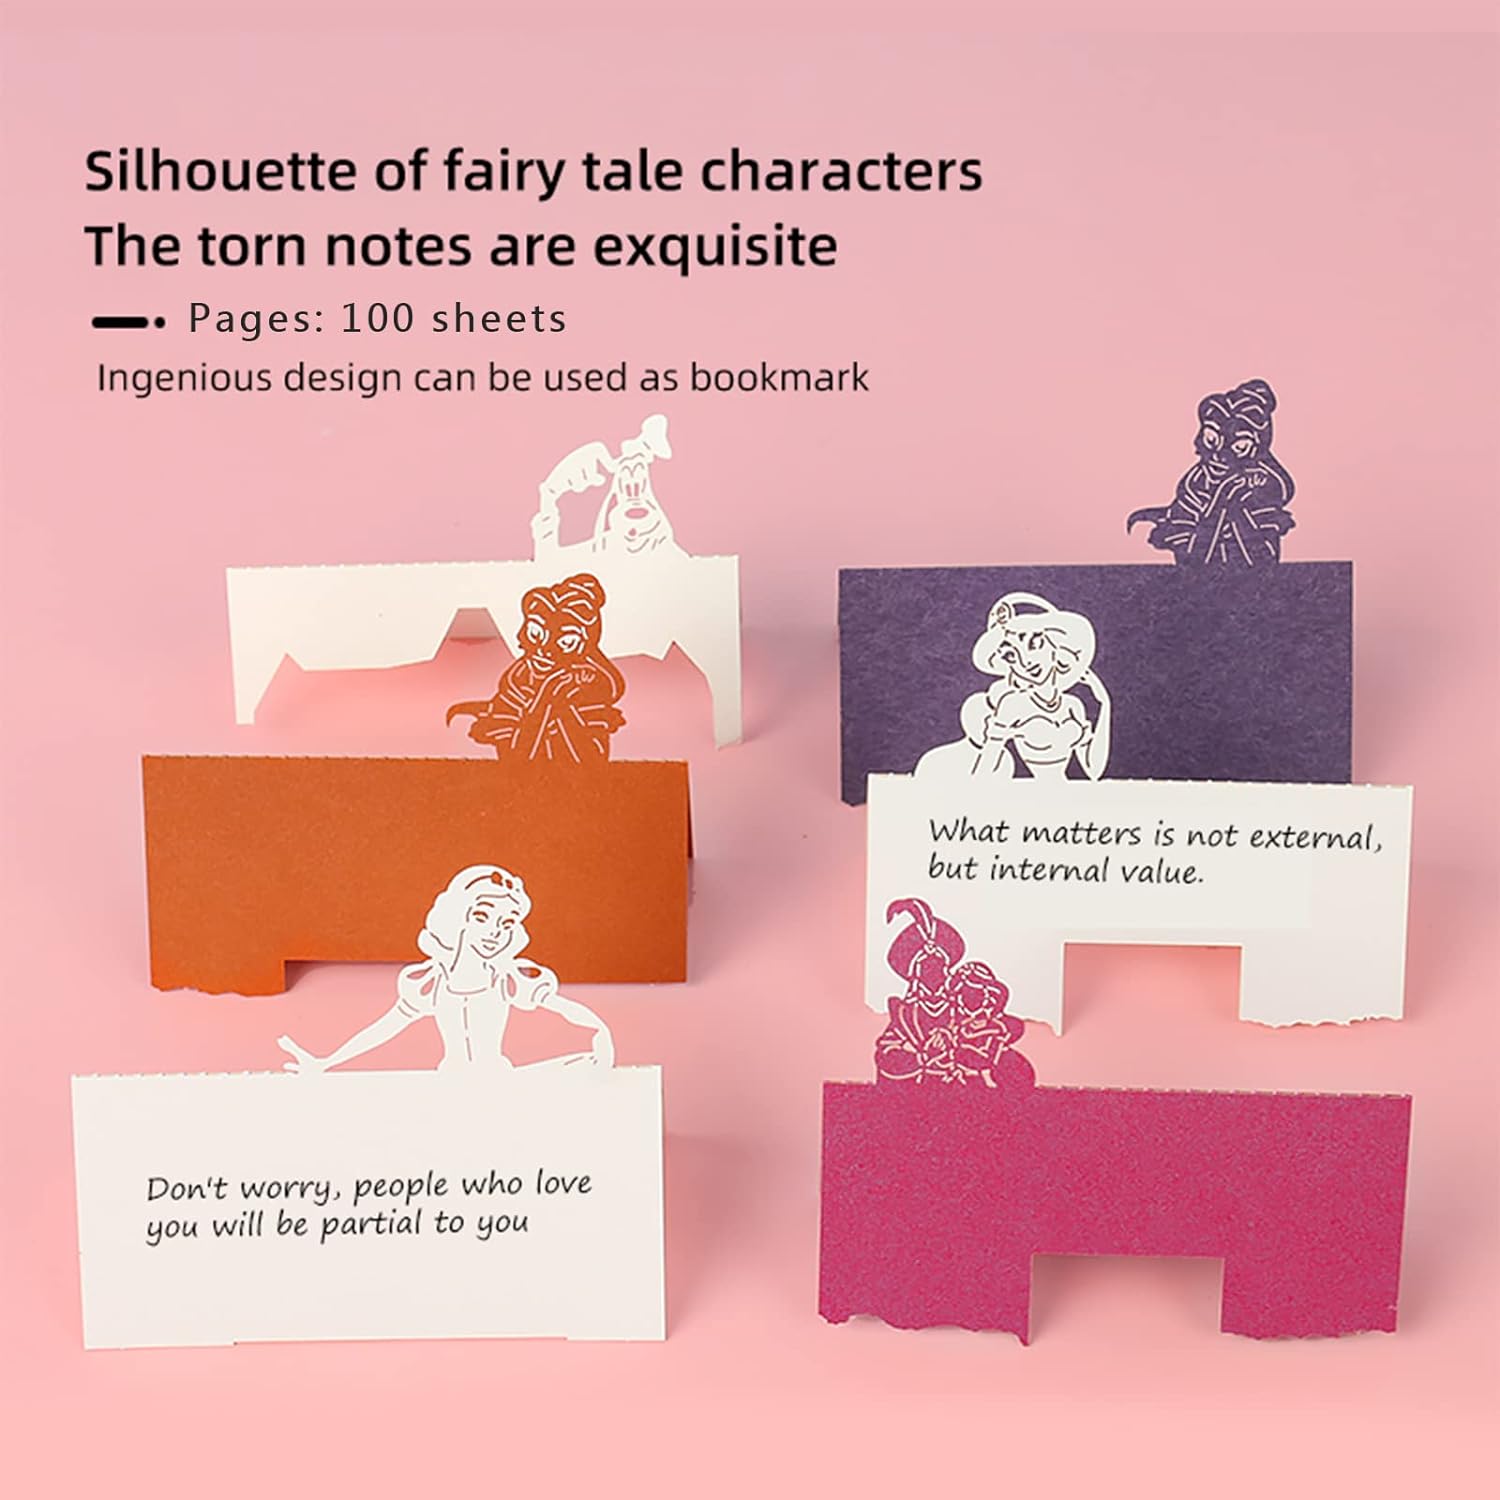 Fairy Tale Castle 3D Sticky Note Paper Memo Pad